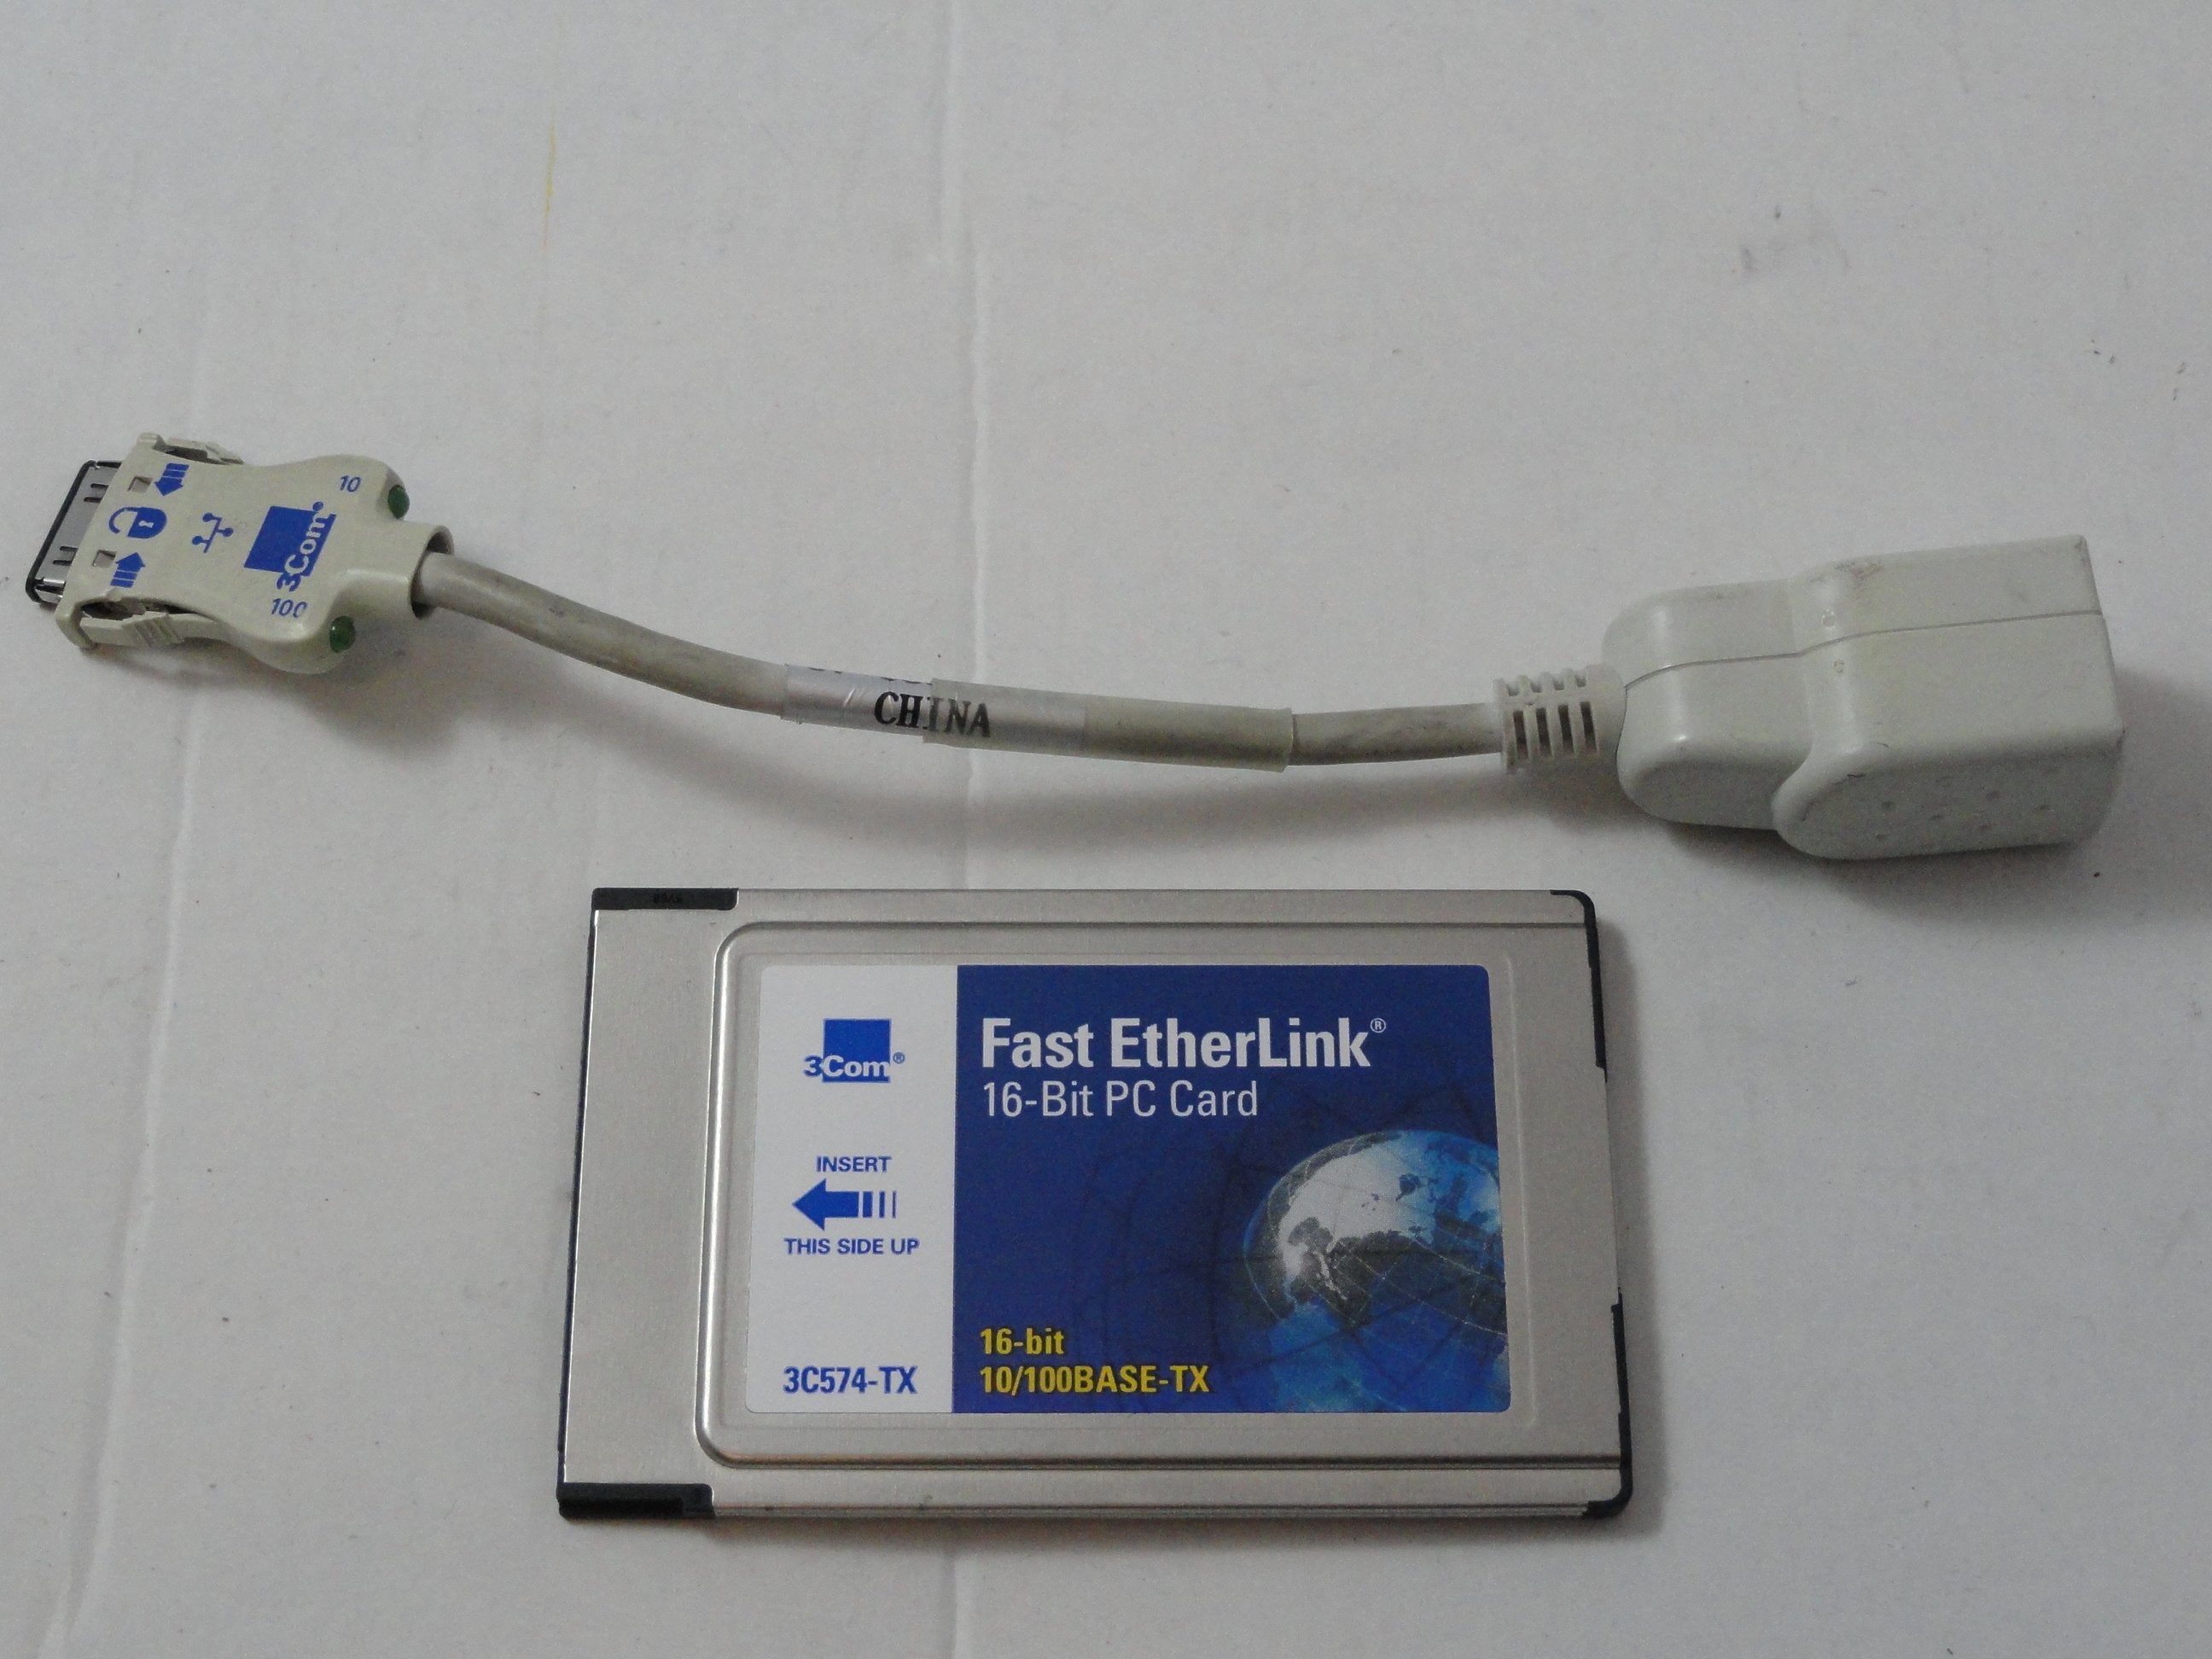 PR02757_3C574-TX_3Com Fast Etherlink 16Bit PCMCIA Card - Image2